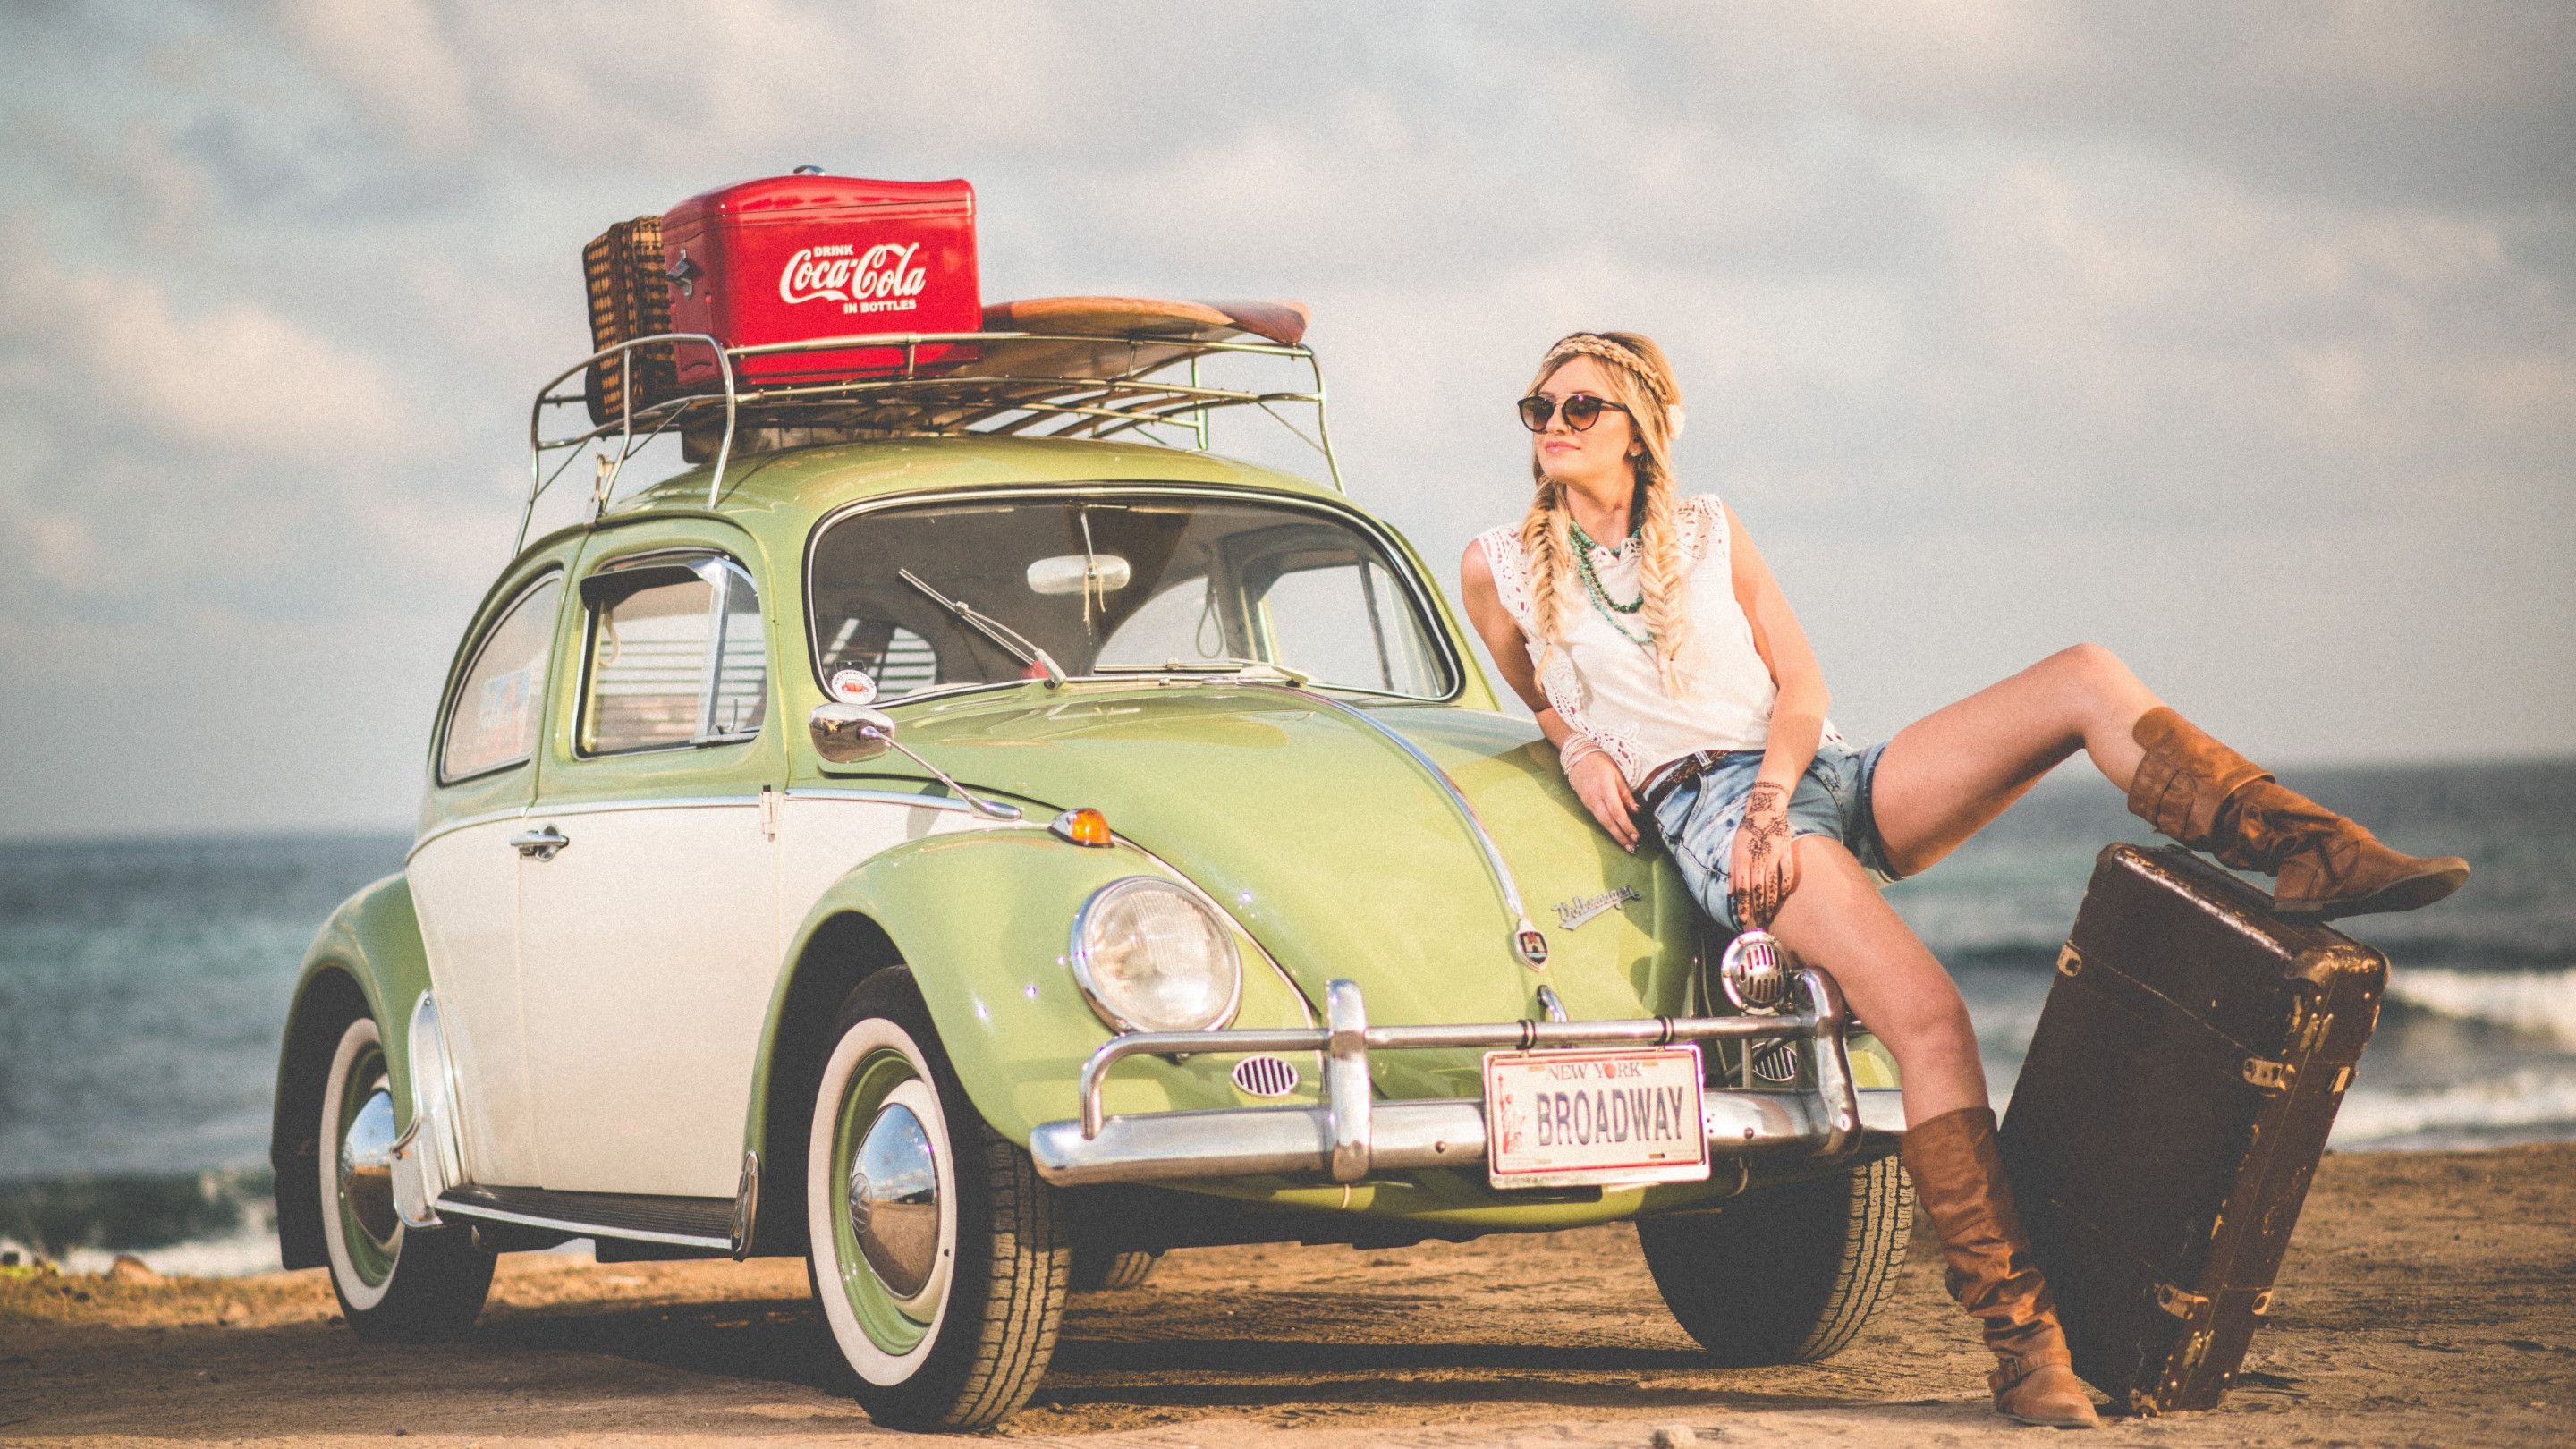 Download wallpaper: VW Beetle, blonde girl, model, travel 2880x1620